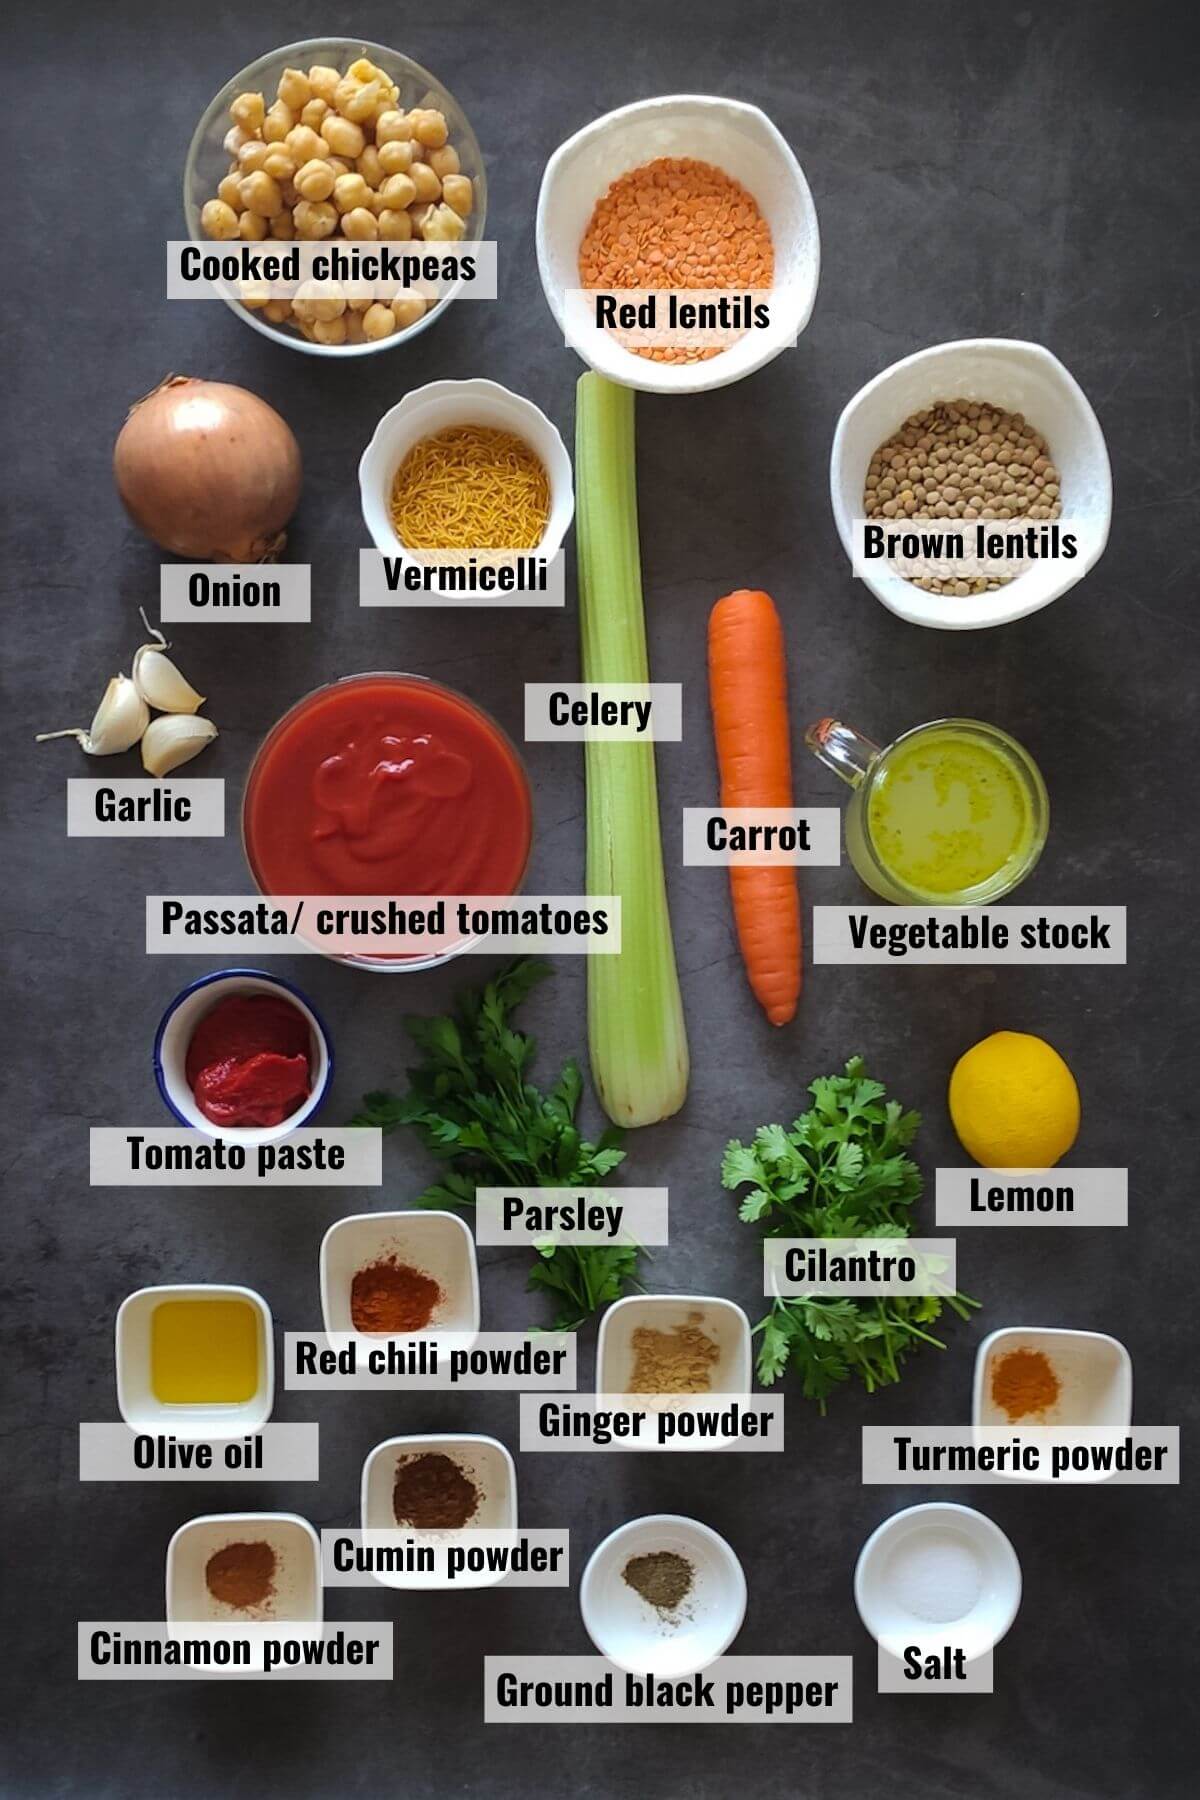 Ingredients of vegetarian harira soup recipe, labeled.